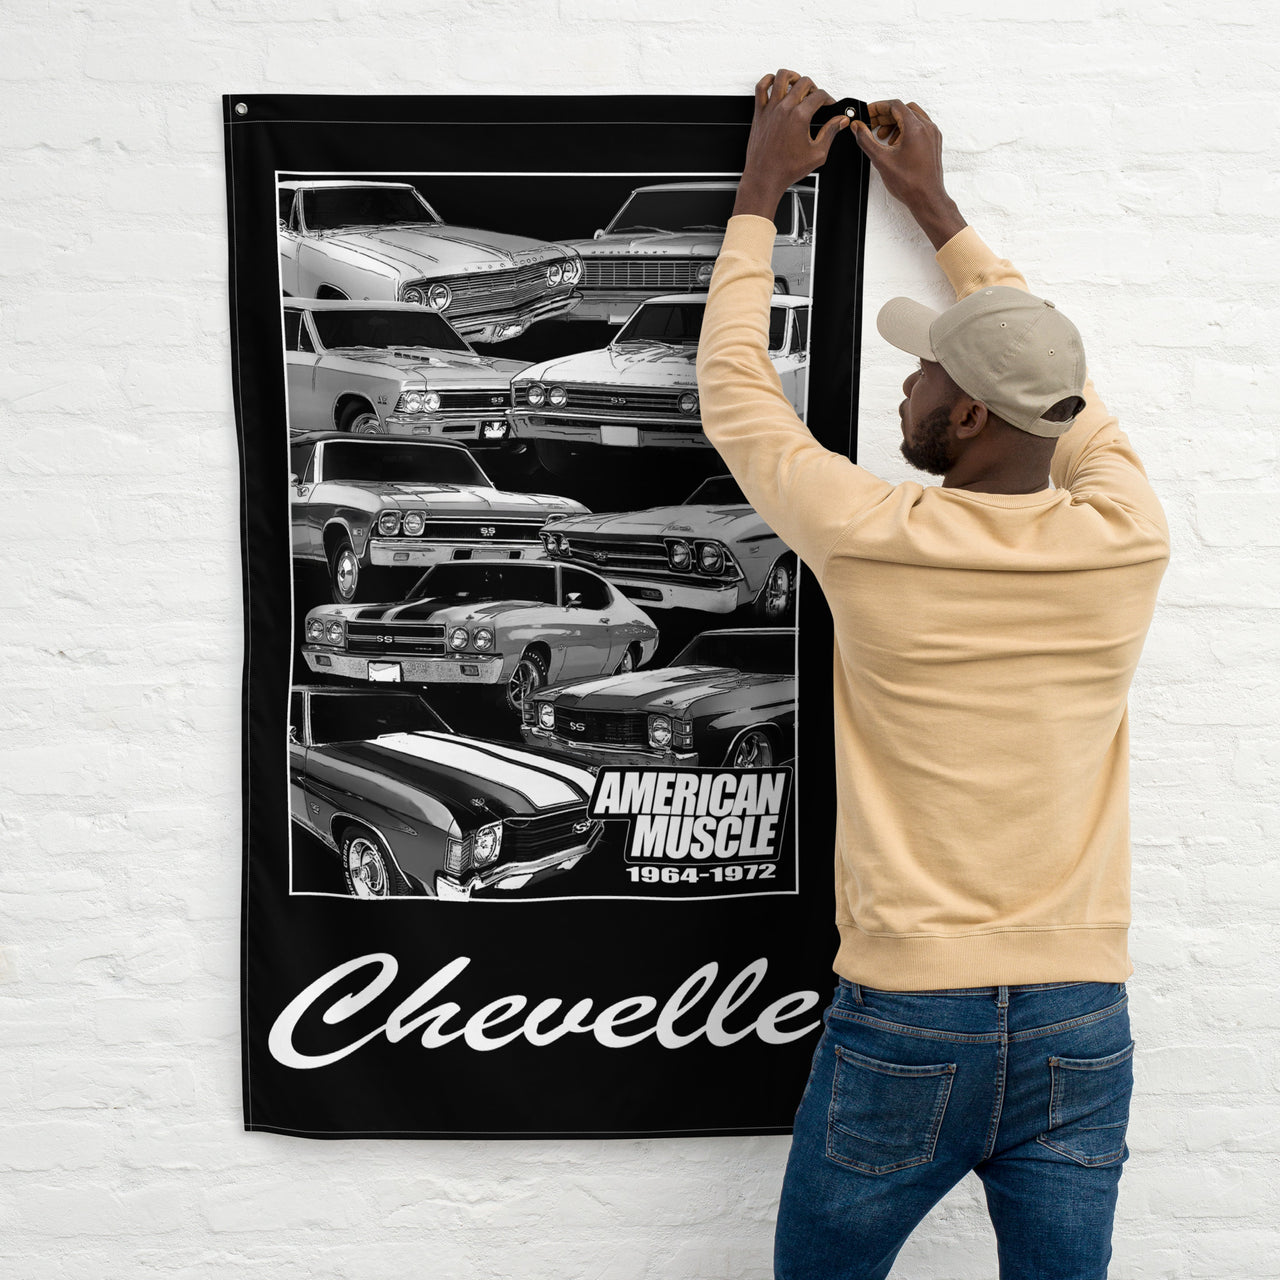 64-72 Chevelle Muscle Car Wall Flag Garage Decor, Dorm Poster, Man Cave Decoration